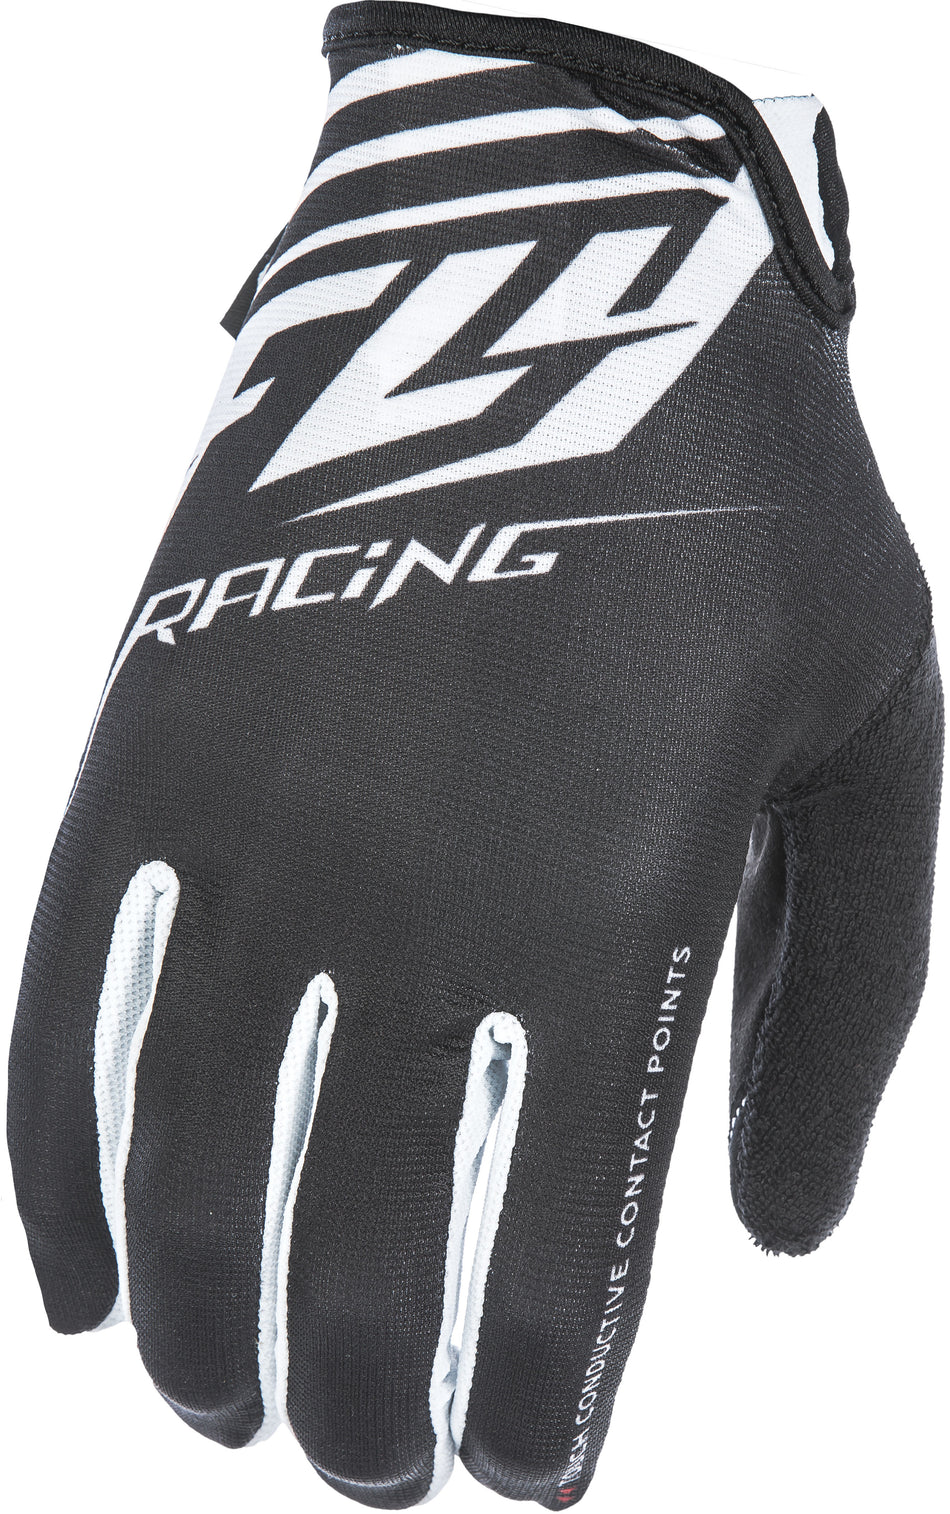 FLY RACING Media Gloves Black/White Sz 9 350-07409